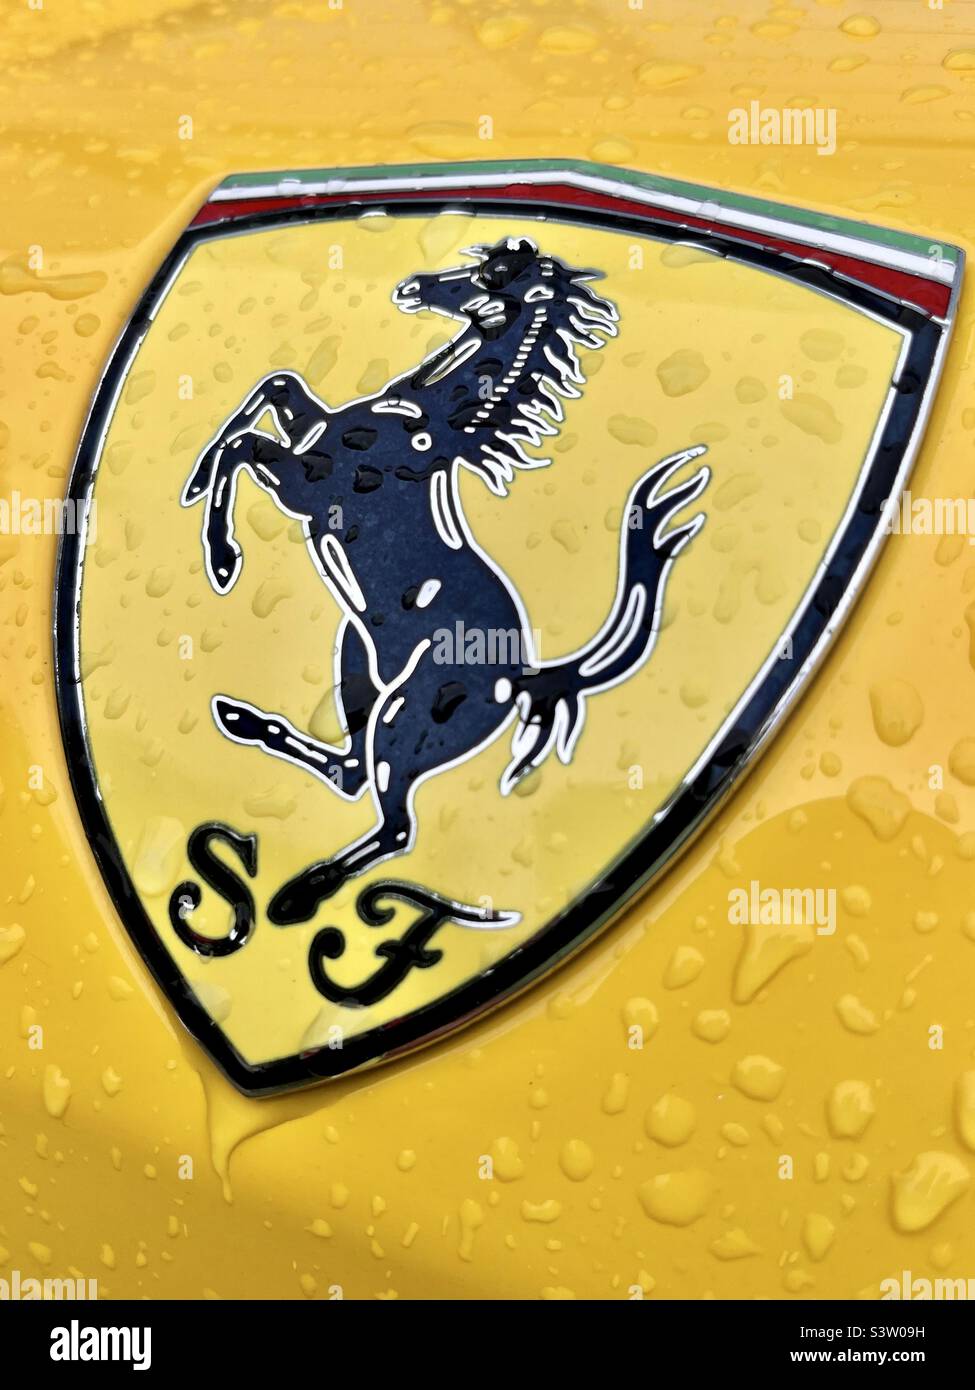 Ferrari Horse Decal / Sticker 26